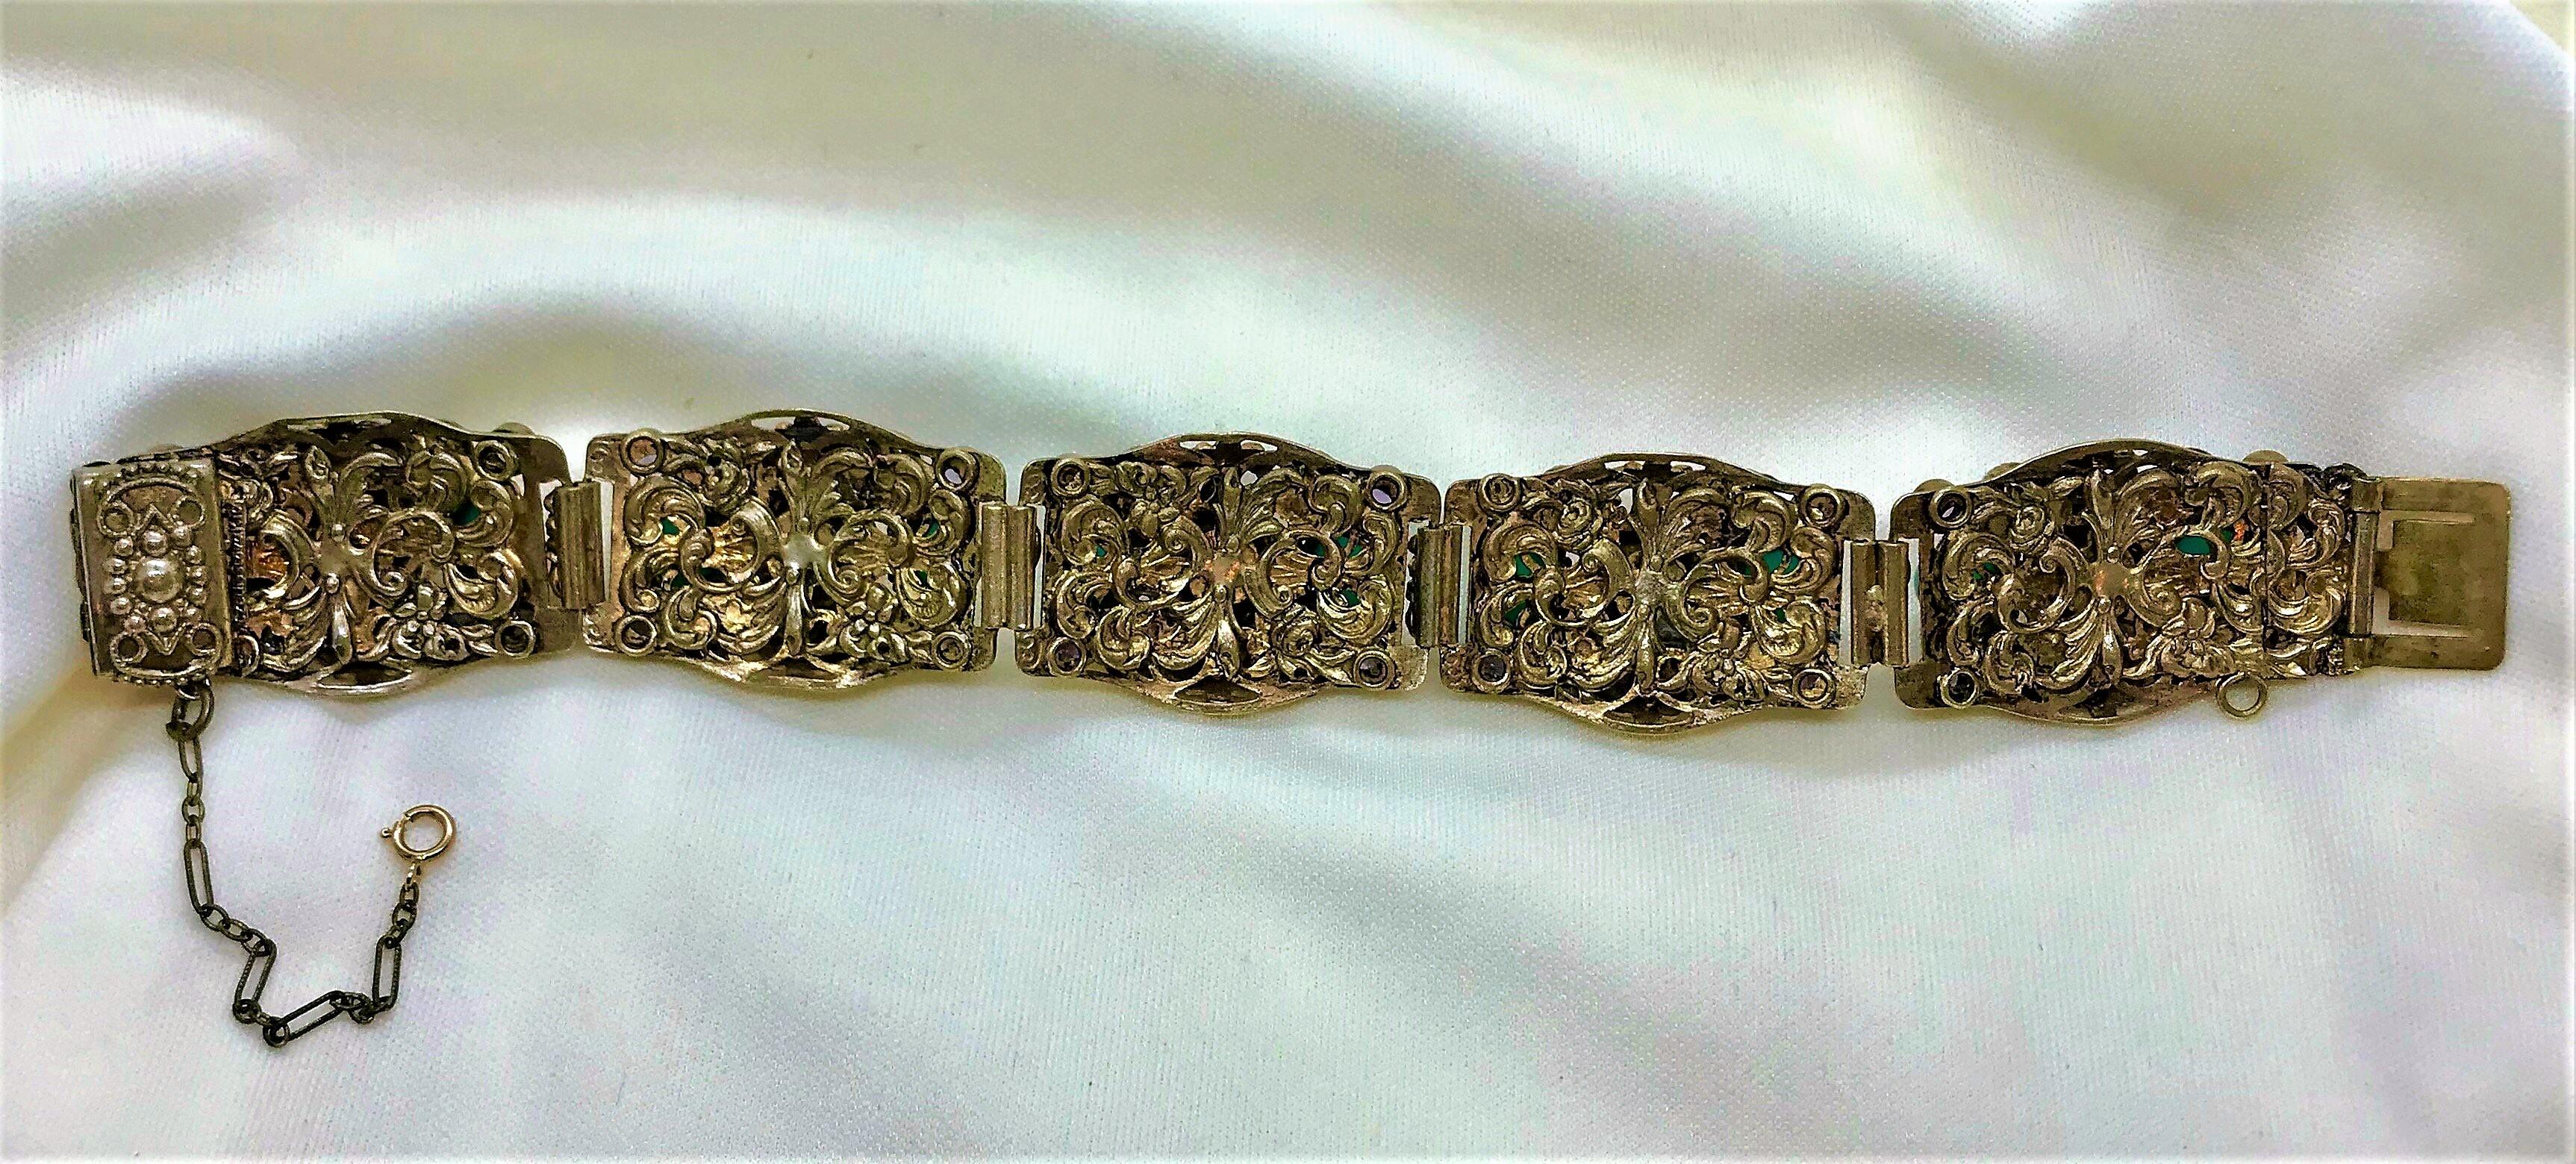 Circa 1950 Austro Hungarian Revival Jeweled Bracelet  For Sale 1